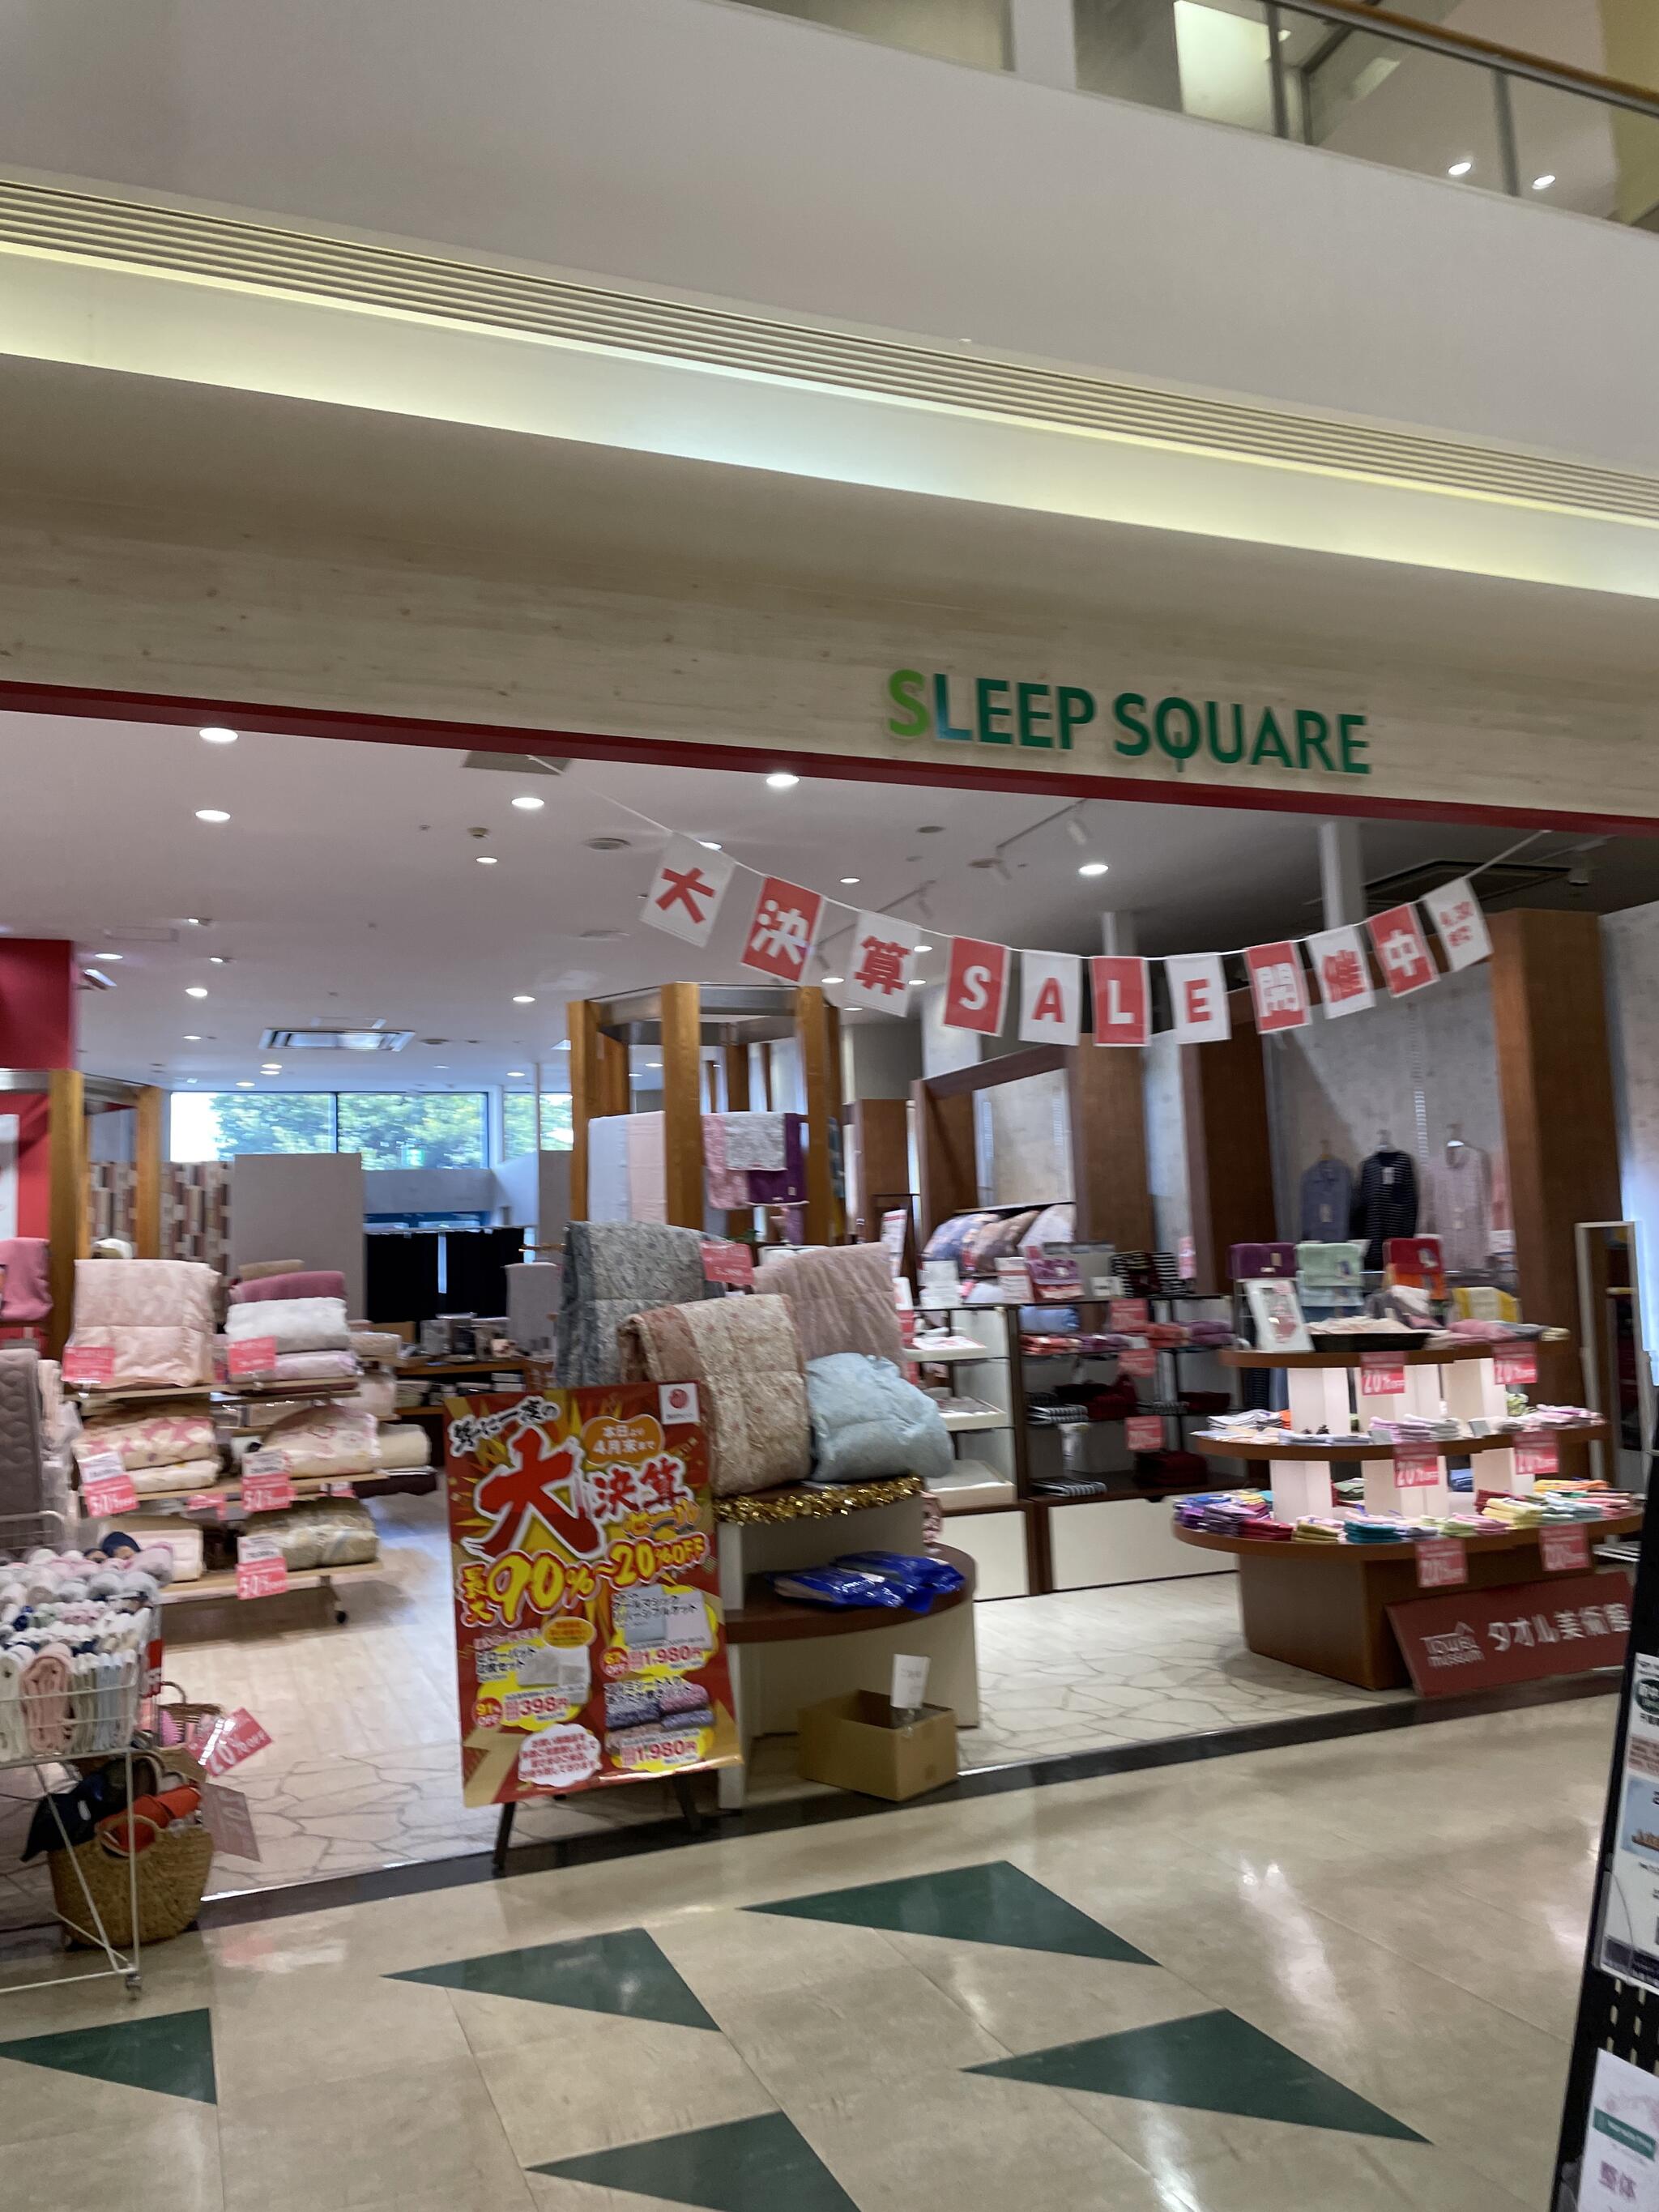 SLEEP SQUARE ワンズモール稲毛店の代表写真1